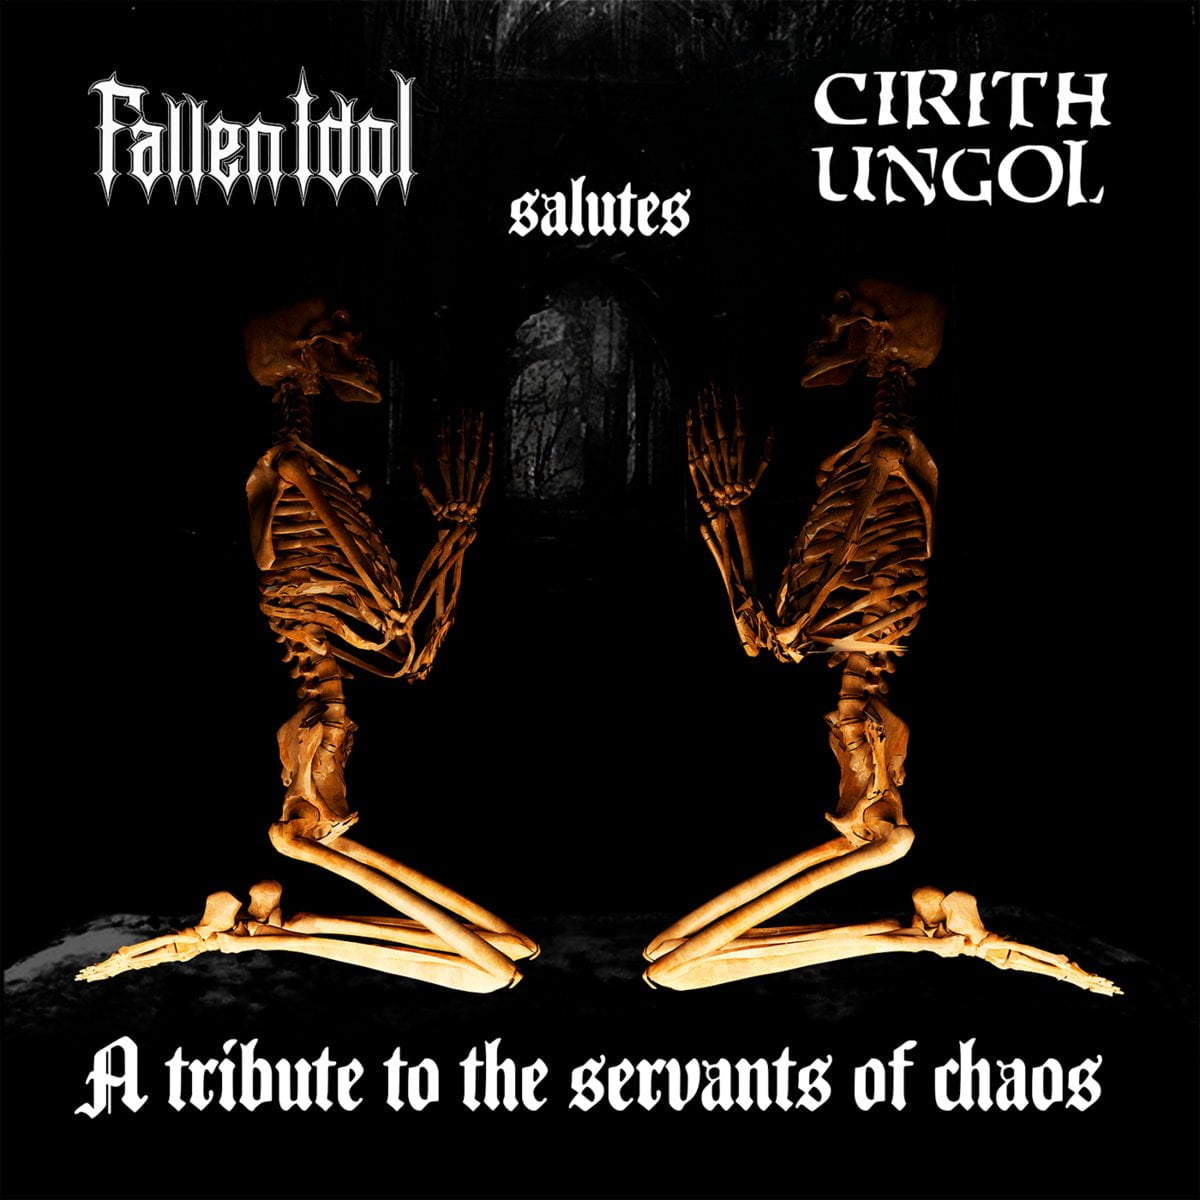 fallen-idol-salutes-cirith-ungol-a-tribute-to-the-servants-of-chaos Fallen Idol salutes Cirith Ungol - A tribute to the servants of chaos  